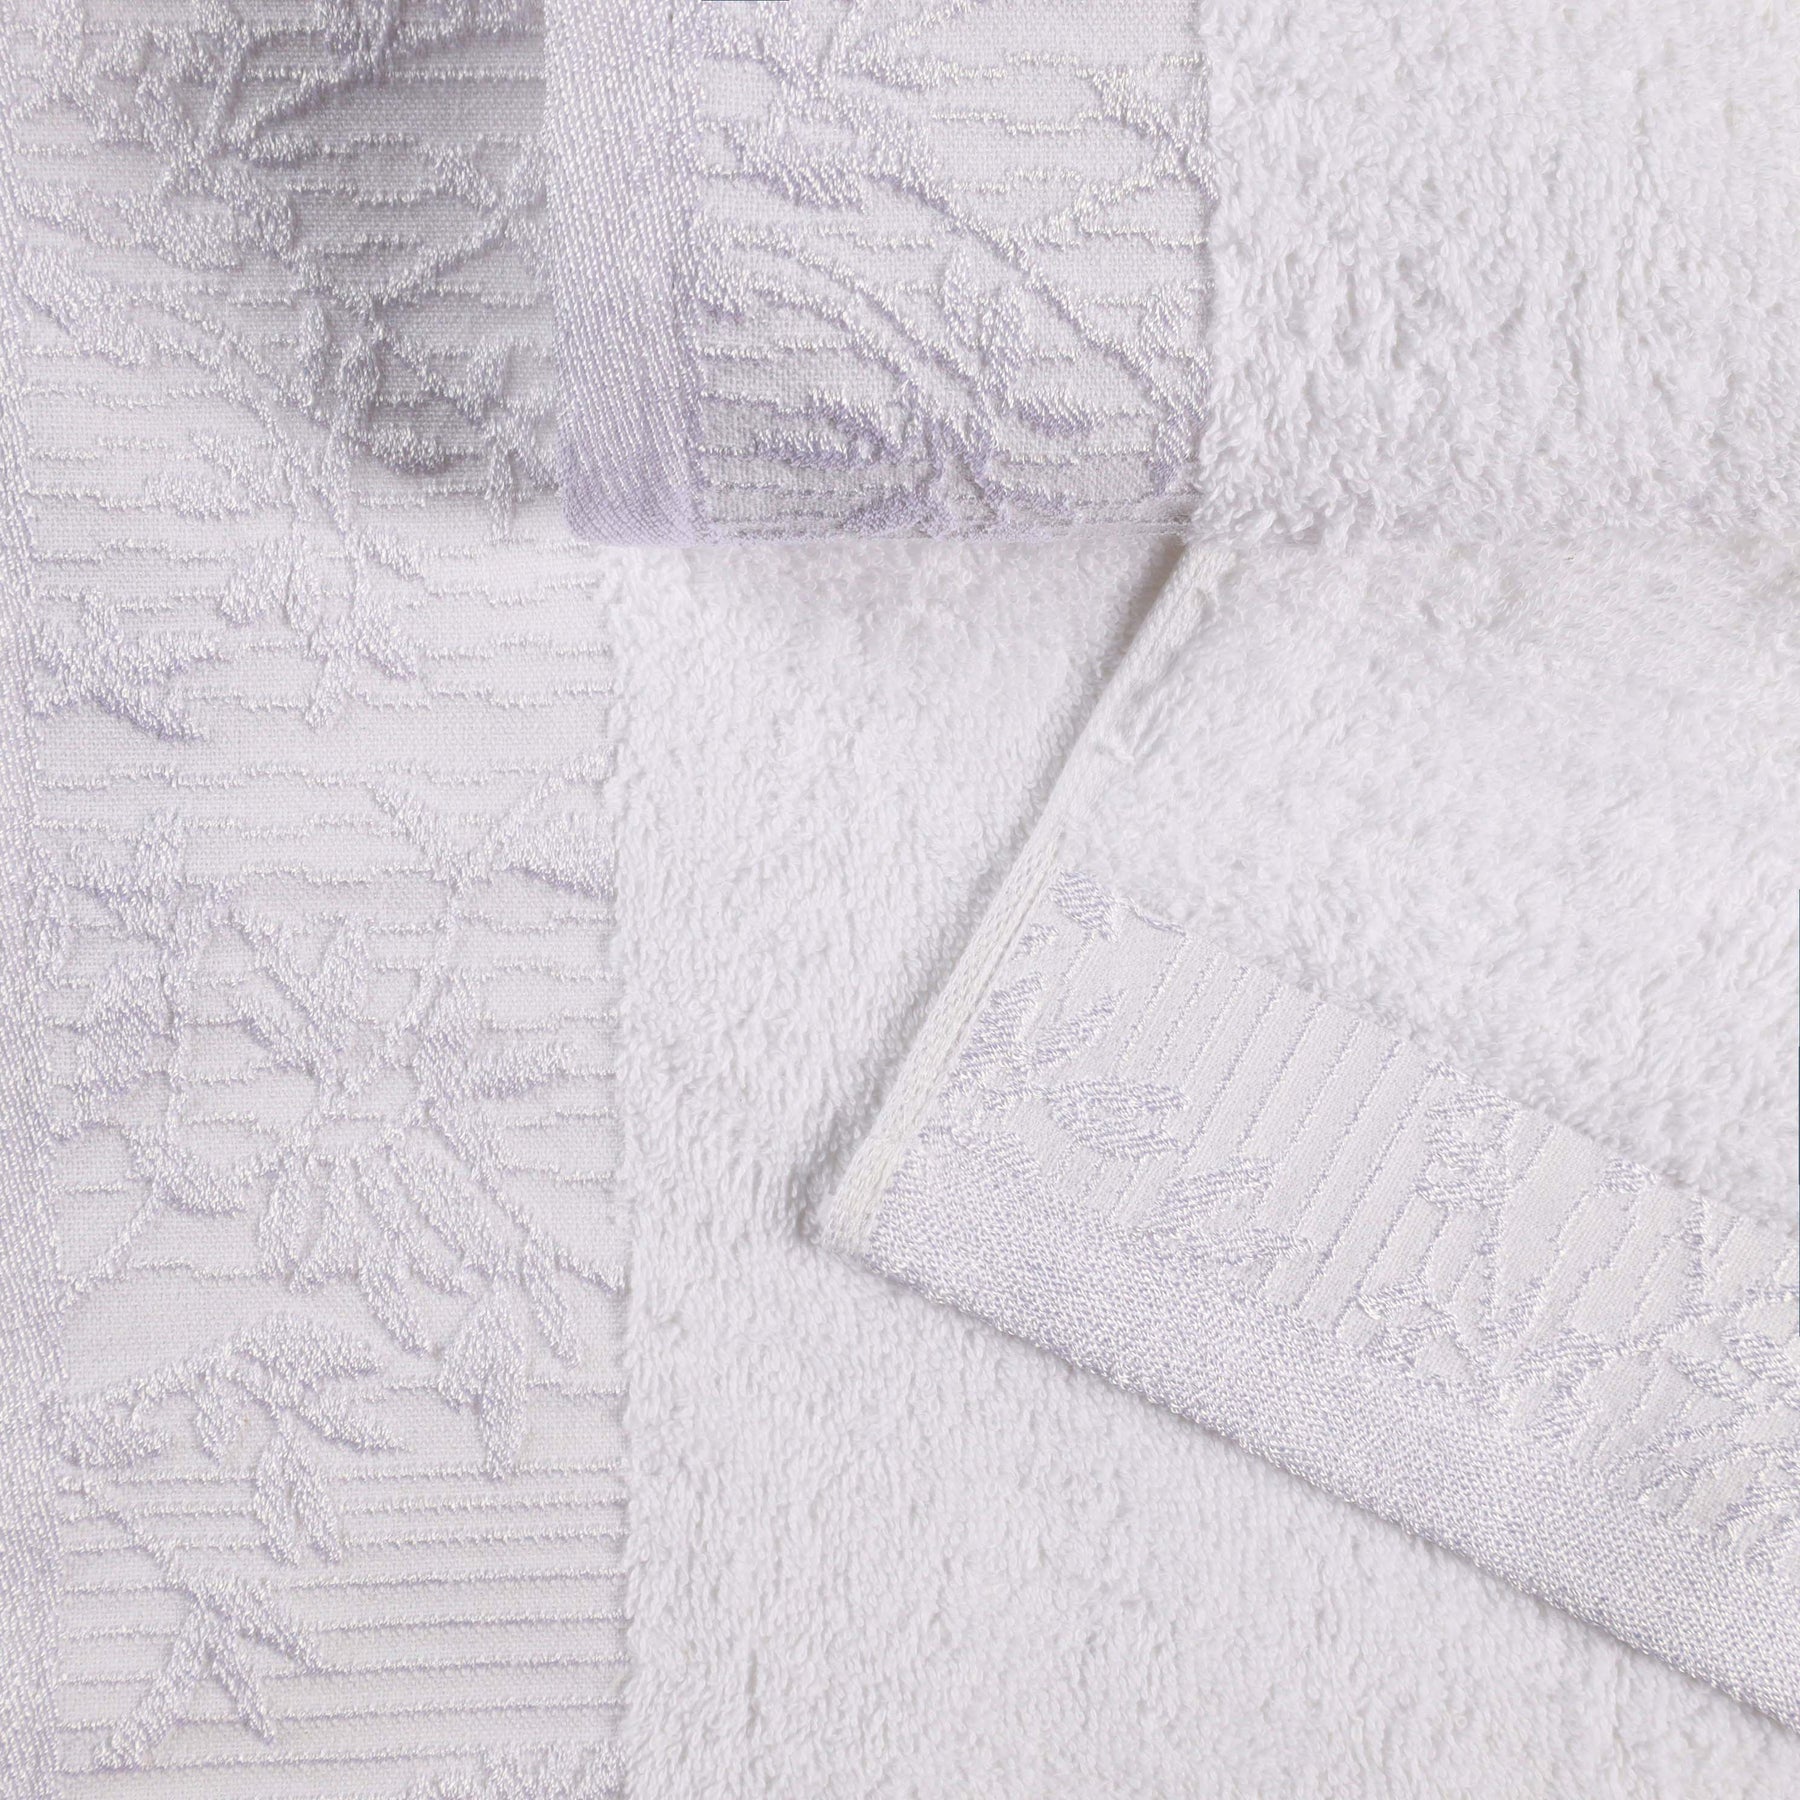 Superior Wisteria Cotton Floral Jacquard Border Hand Towels (Set of 4)